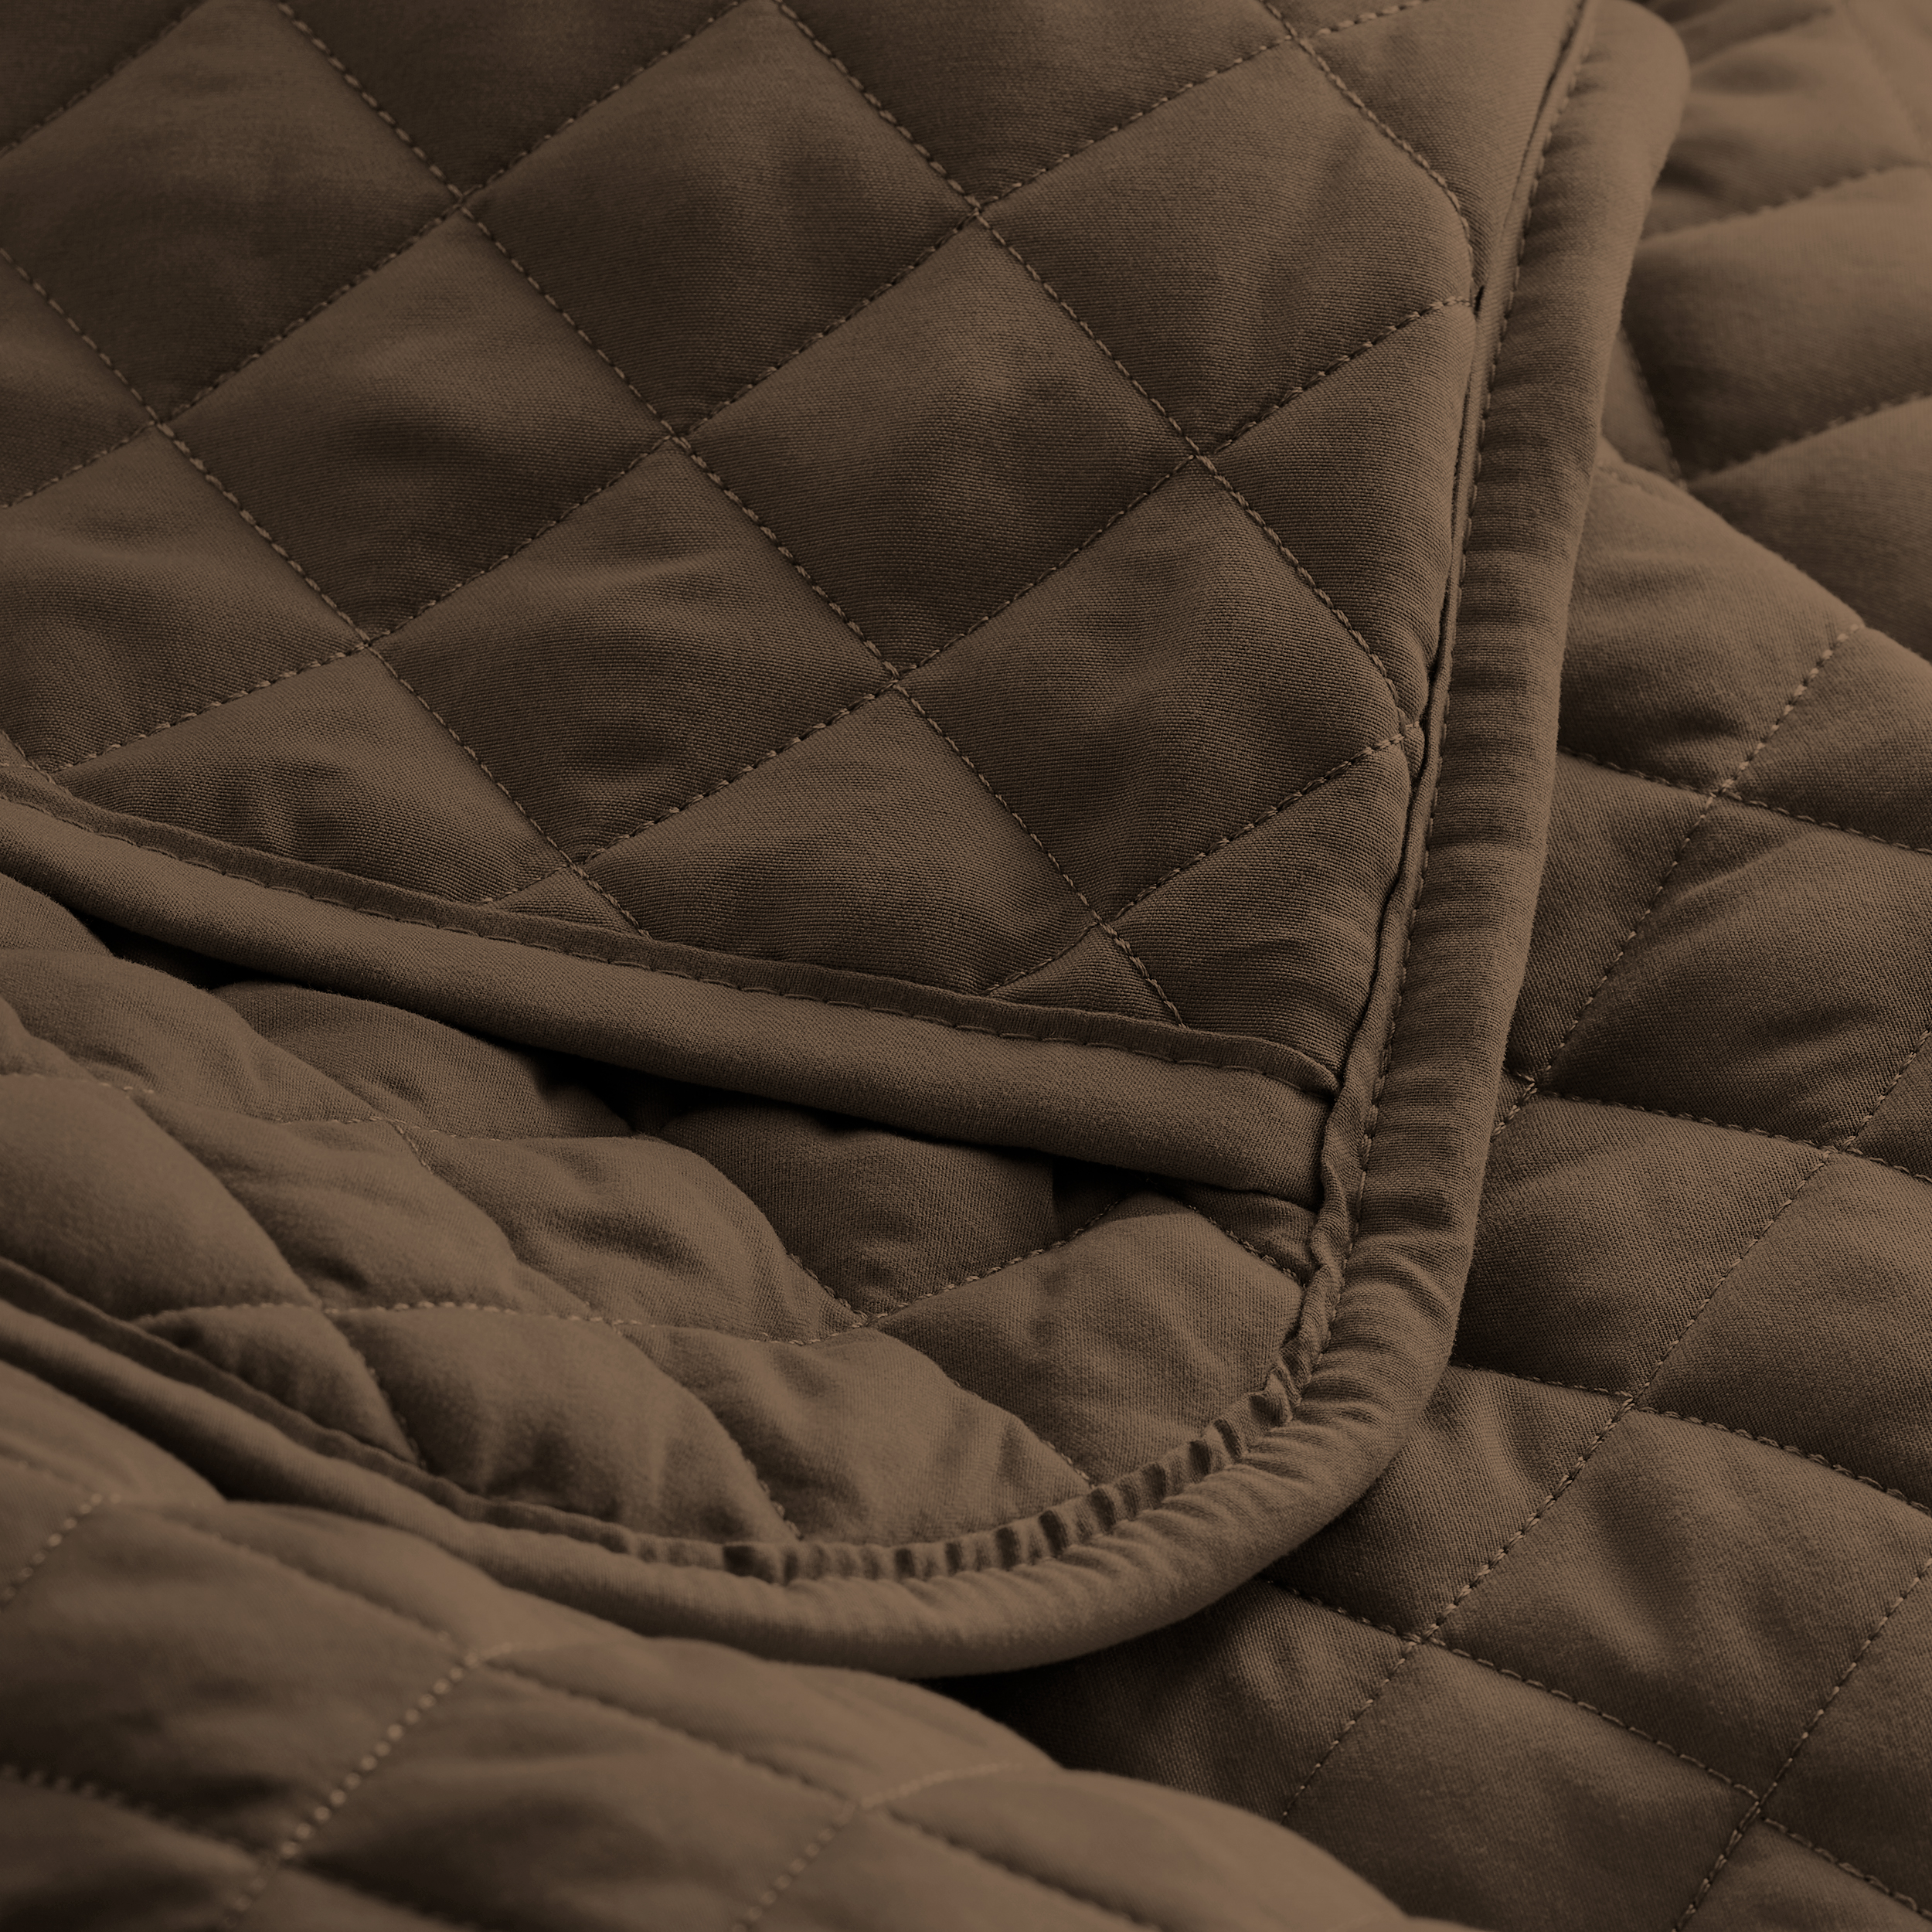 Bare Home Premium 3 Piece Coverlet Set - Diamond Stitched - Ultra-Soft Luxurious Lightweight All Season Bedspread